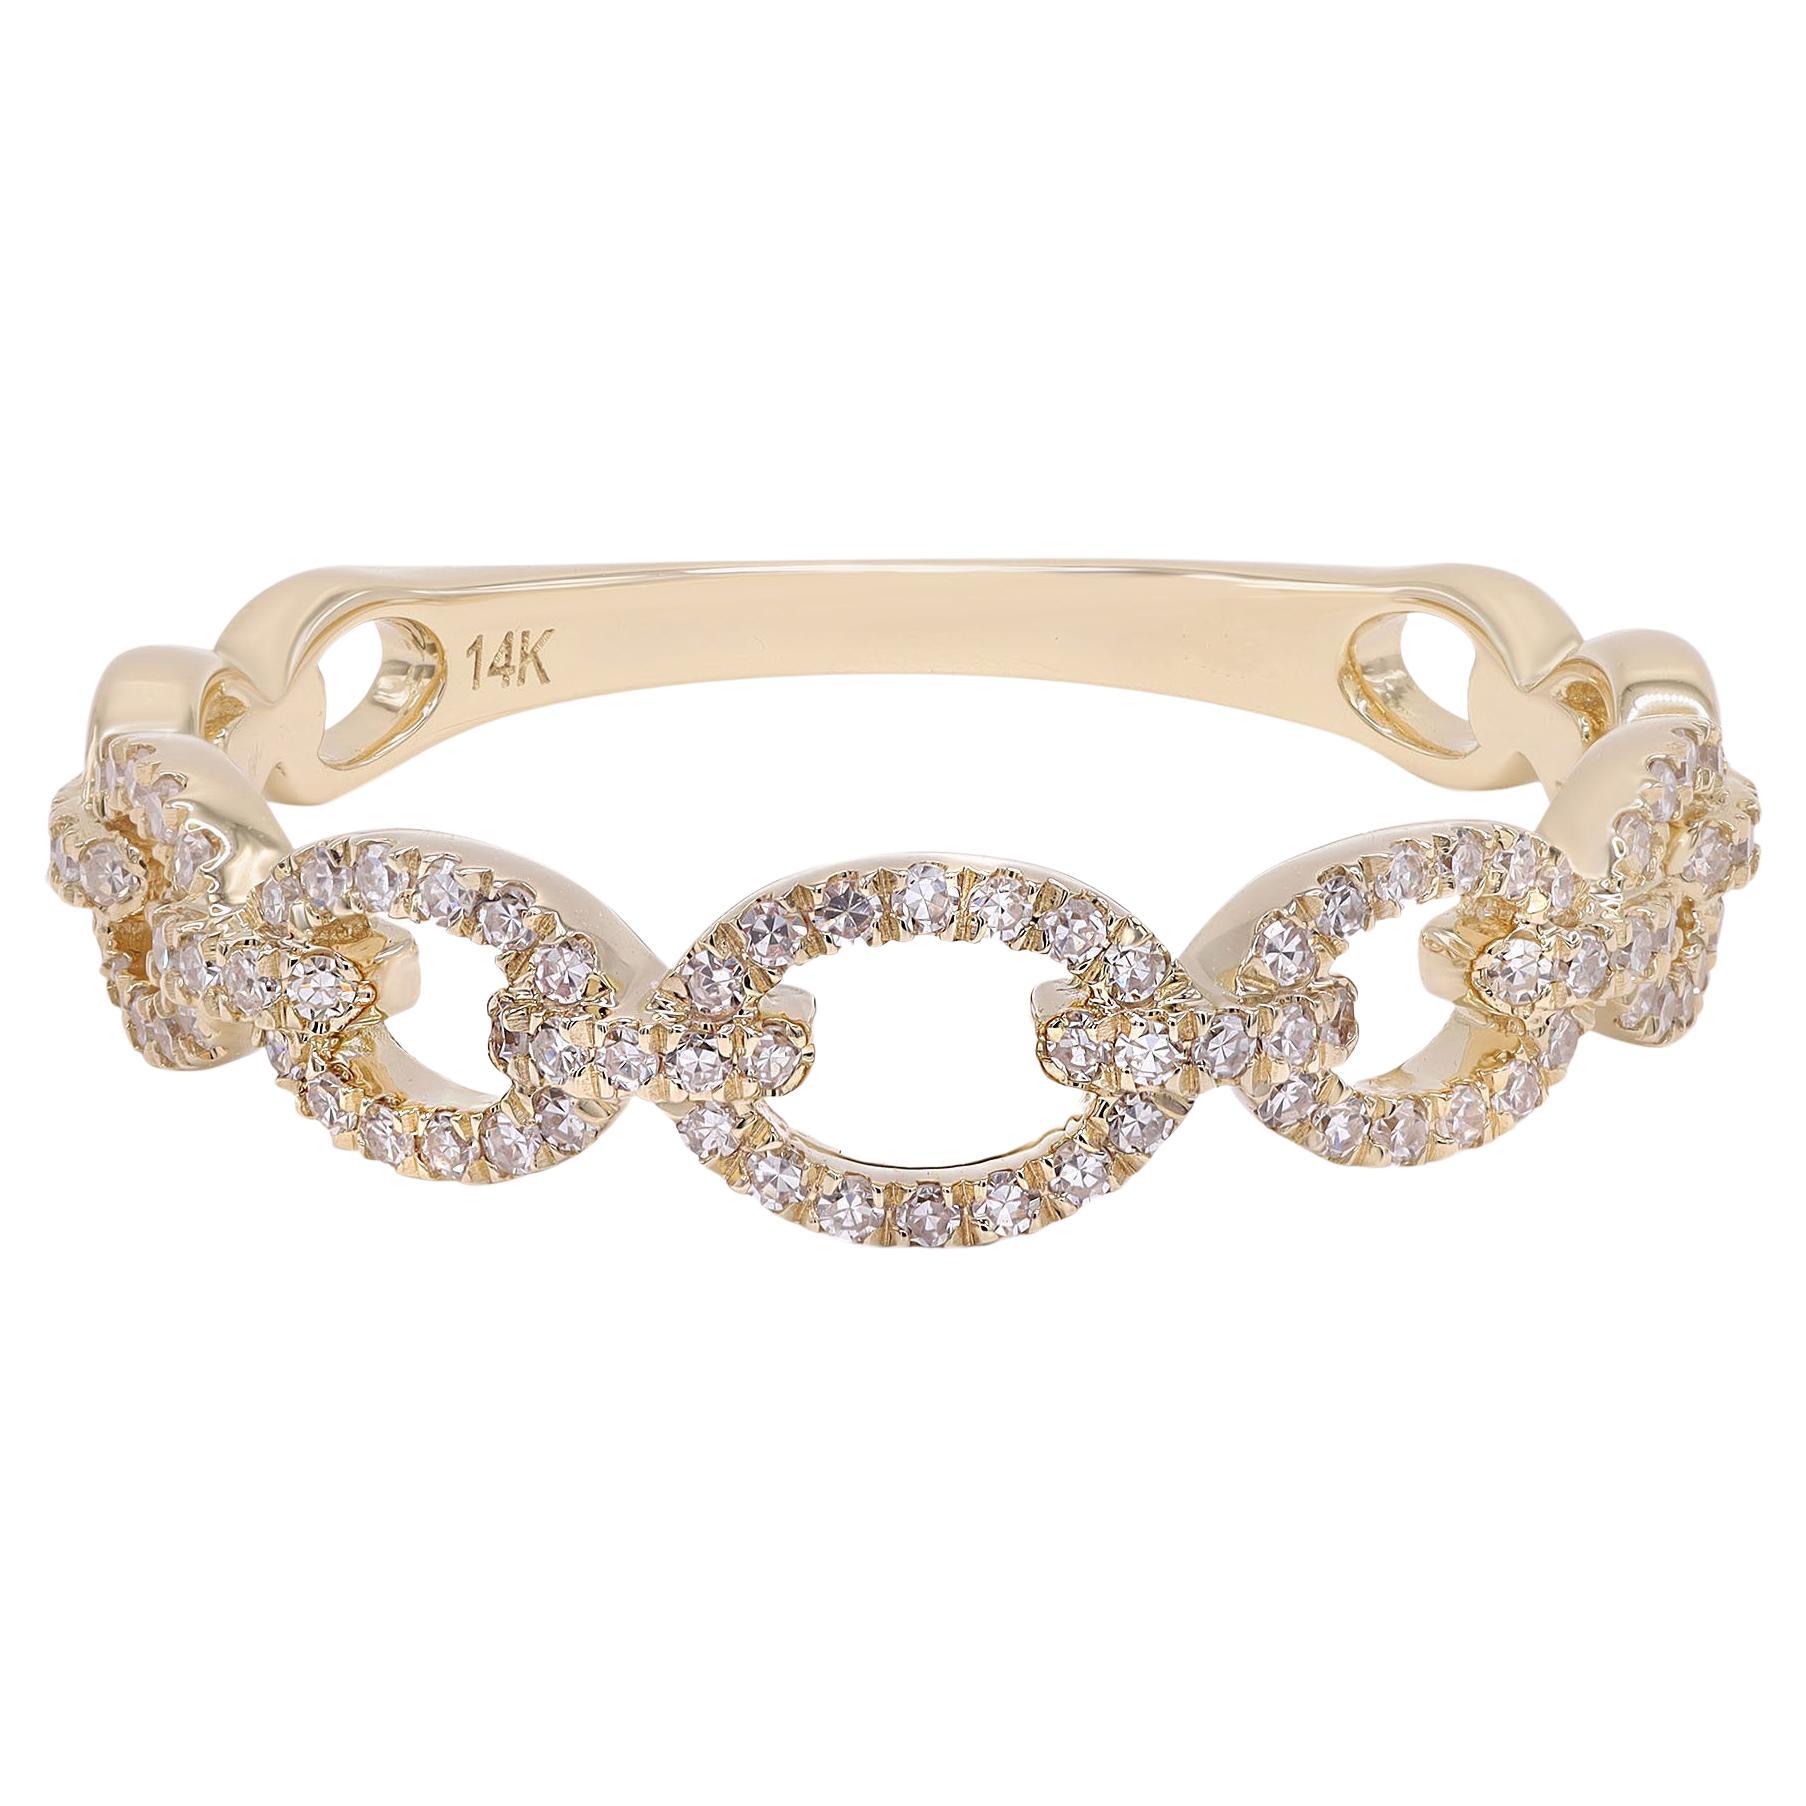 Rachel Koen Pave Chain Link Diamond Ring 14K Yellow Gold 0.23Cttw For Sale